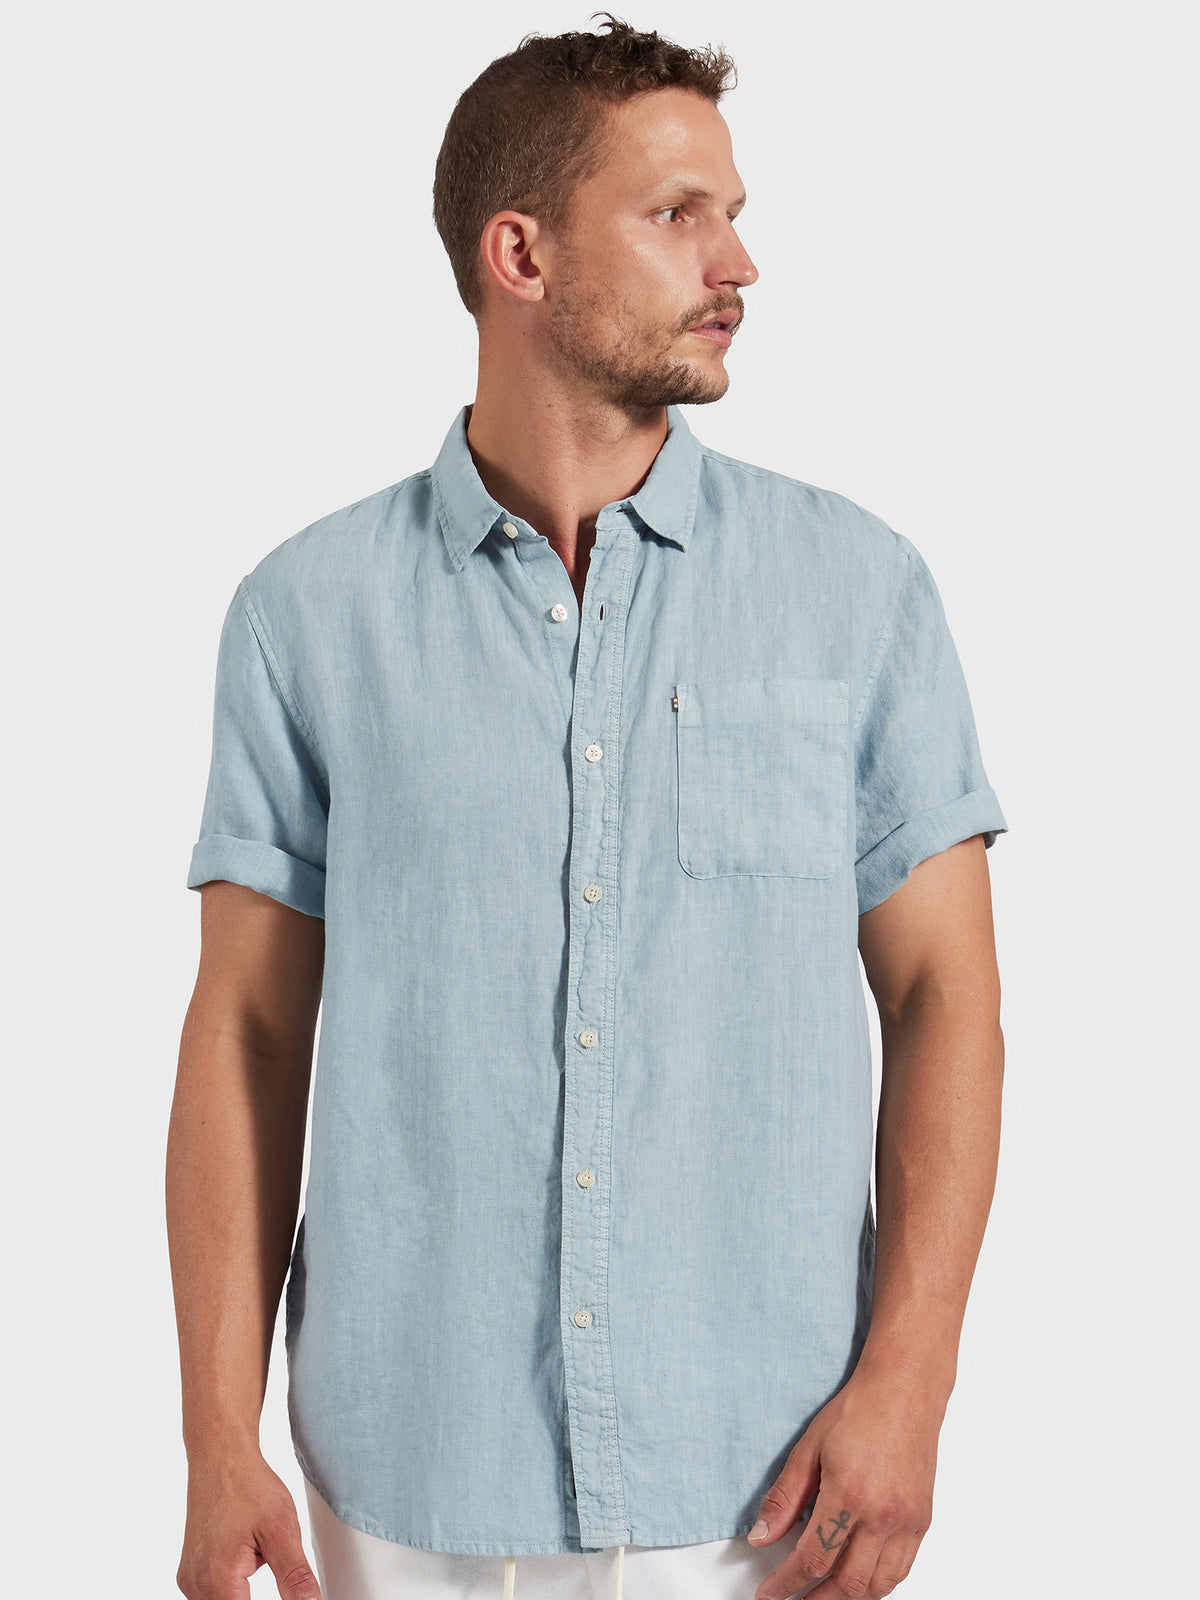 Hampton Linen Short Sleeve Shirt in Atlantic Blue